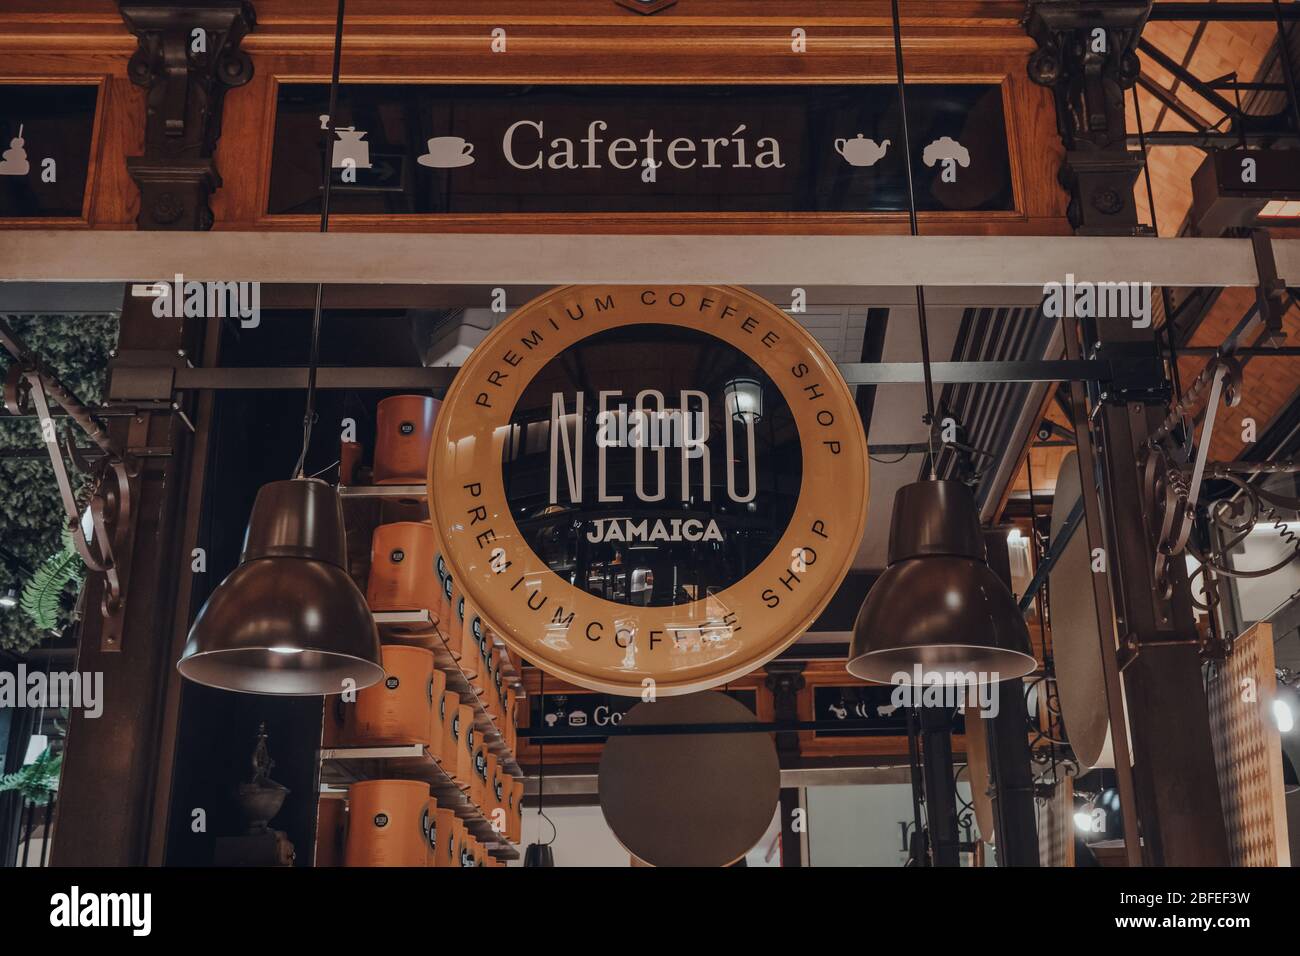 Madrid, Spain - January 26, 2020: Sign at Negro Jamaica Cafeteria in  Mercado de San Miguel (